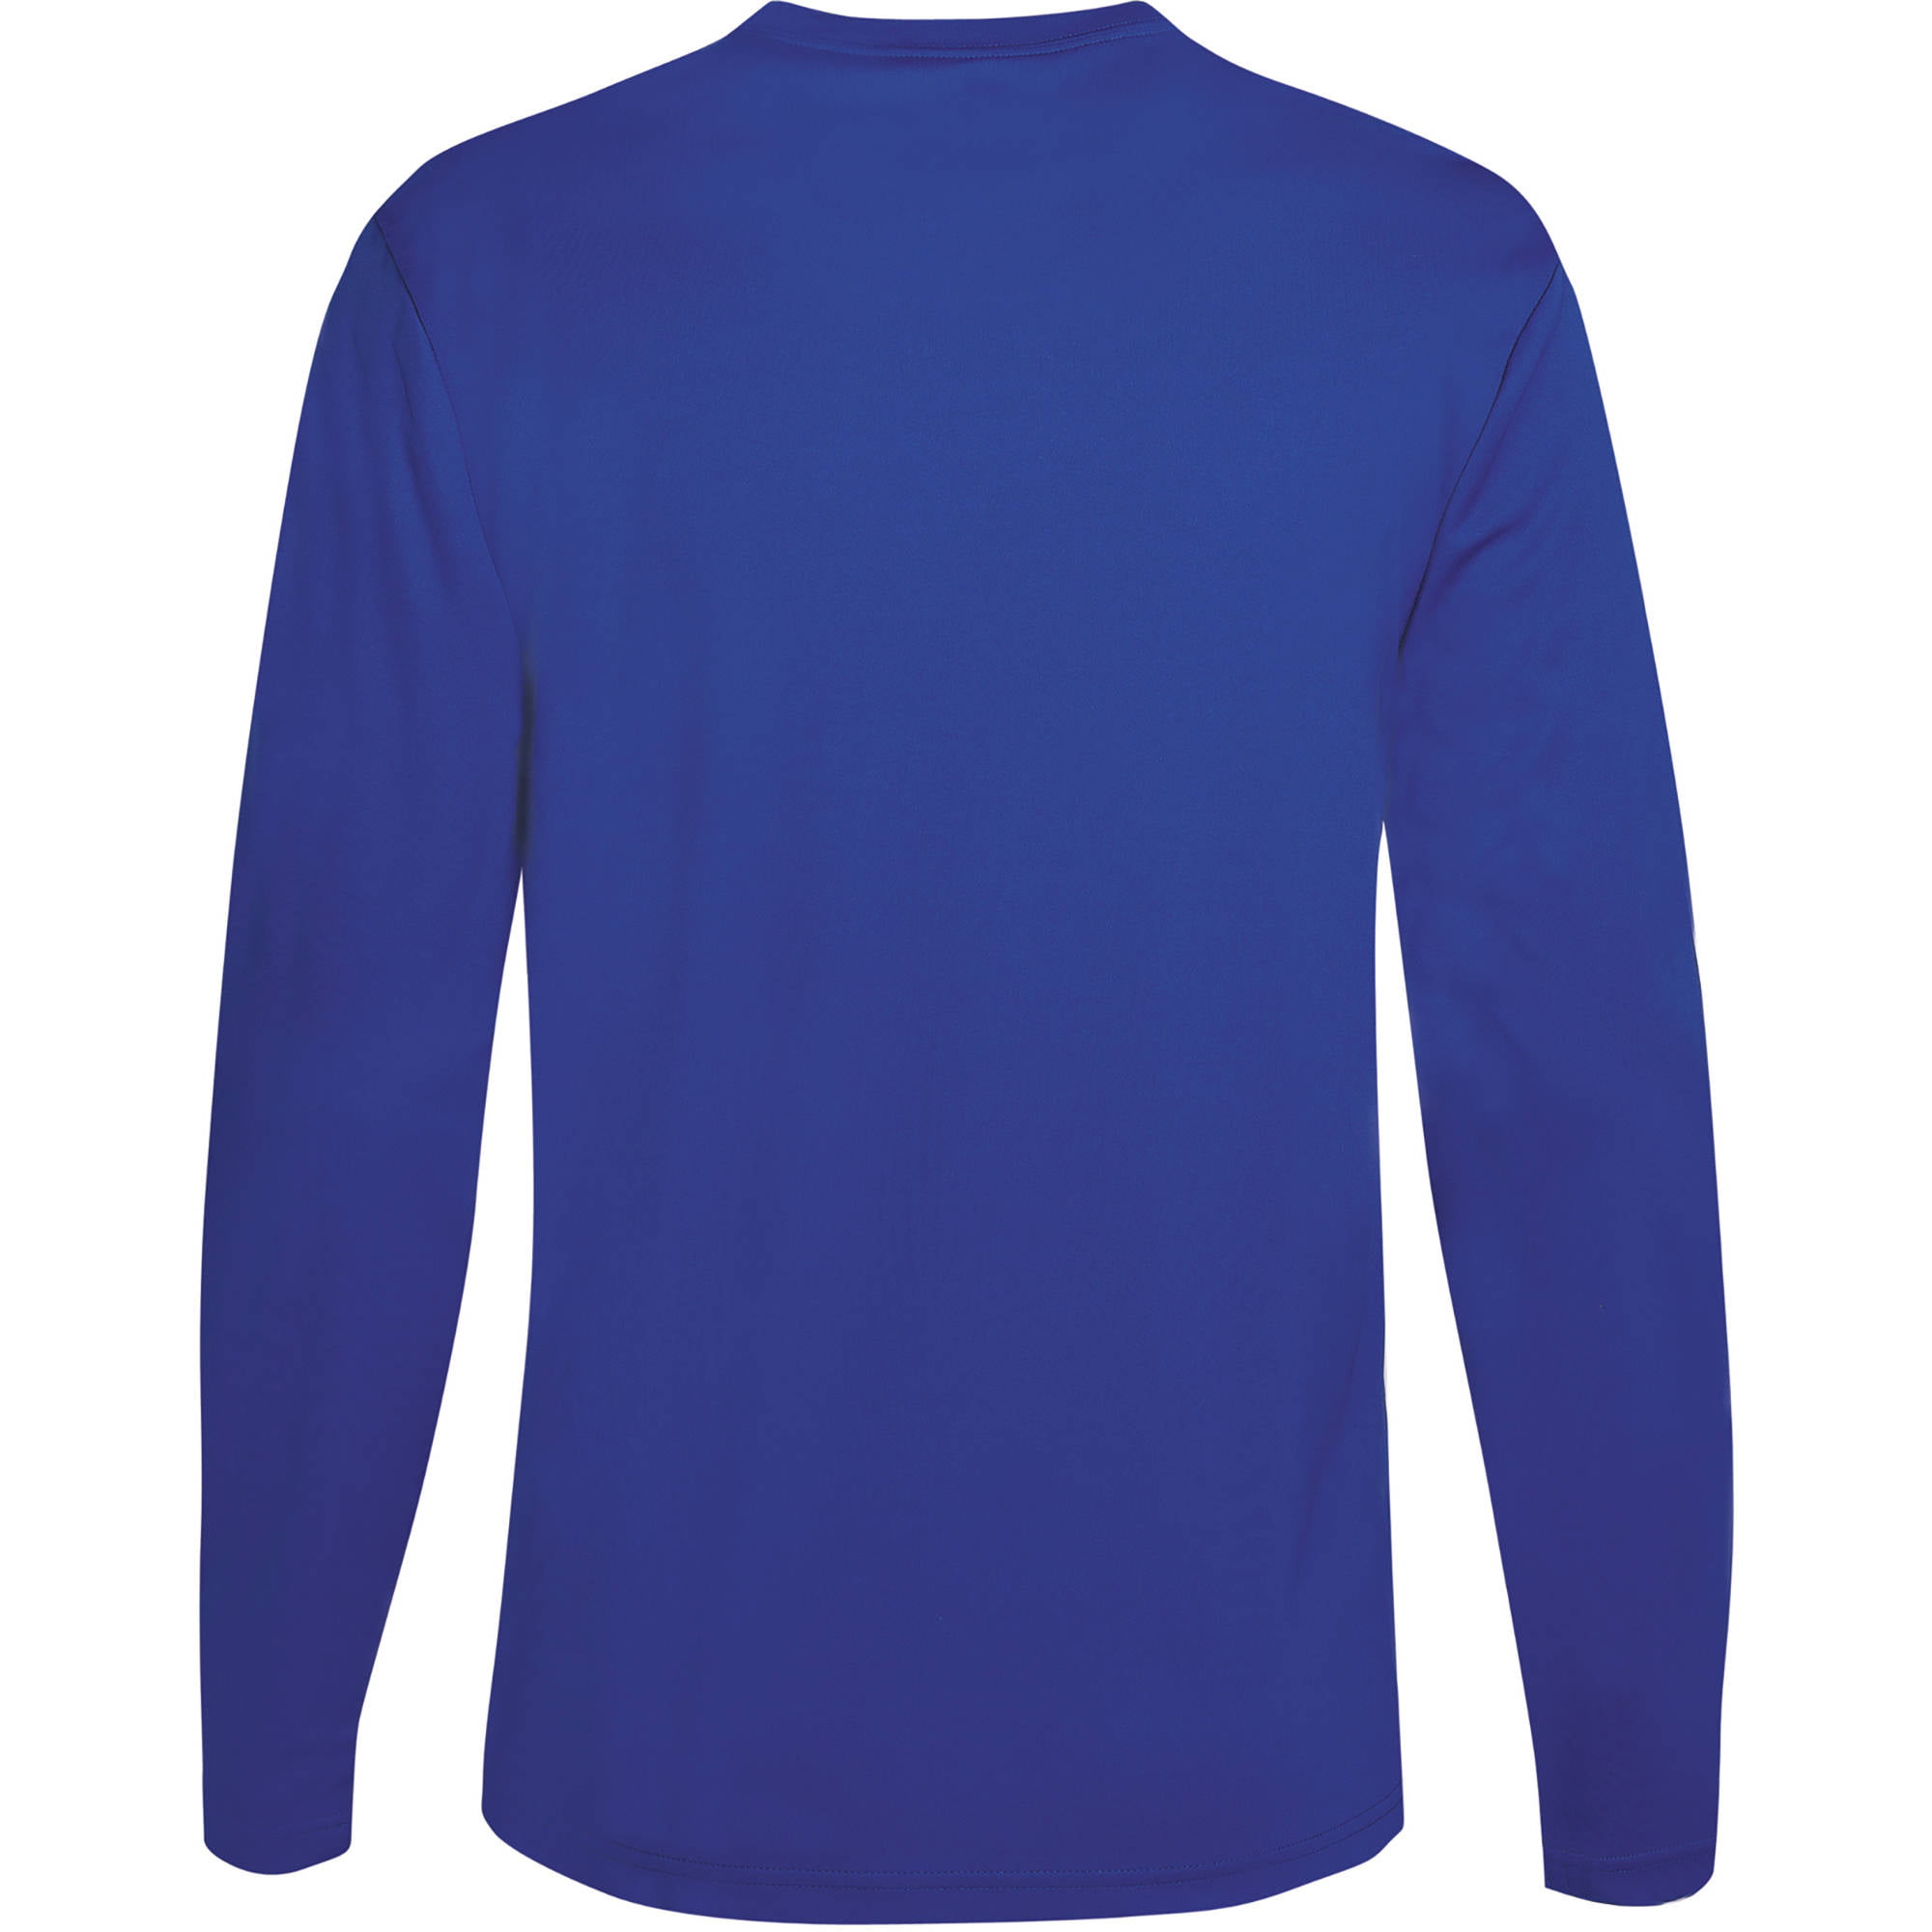 Long Sleeve Blue T Shirt - South Park T Shirts